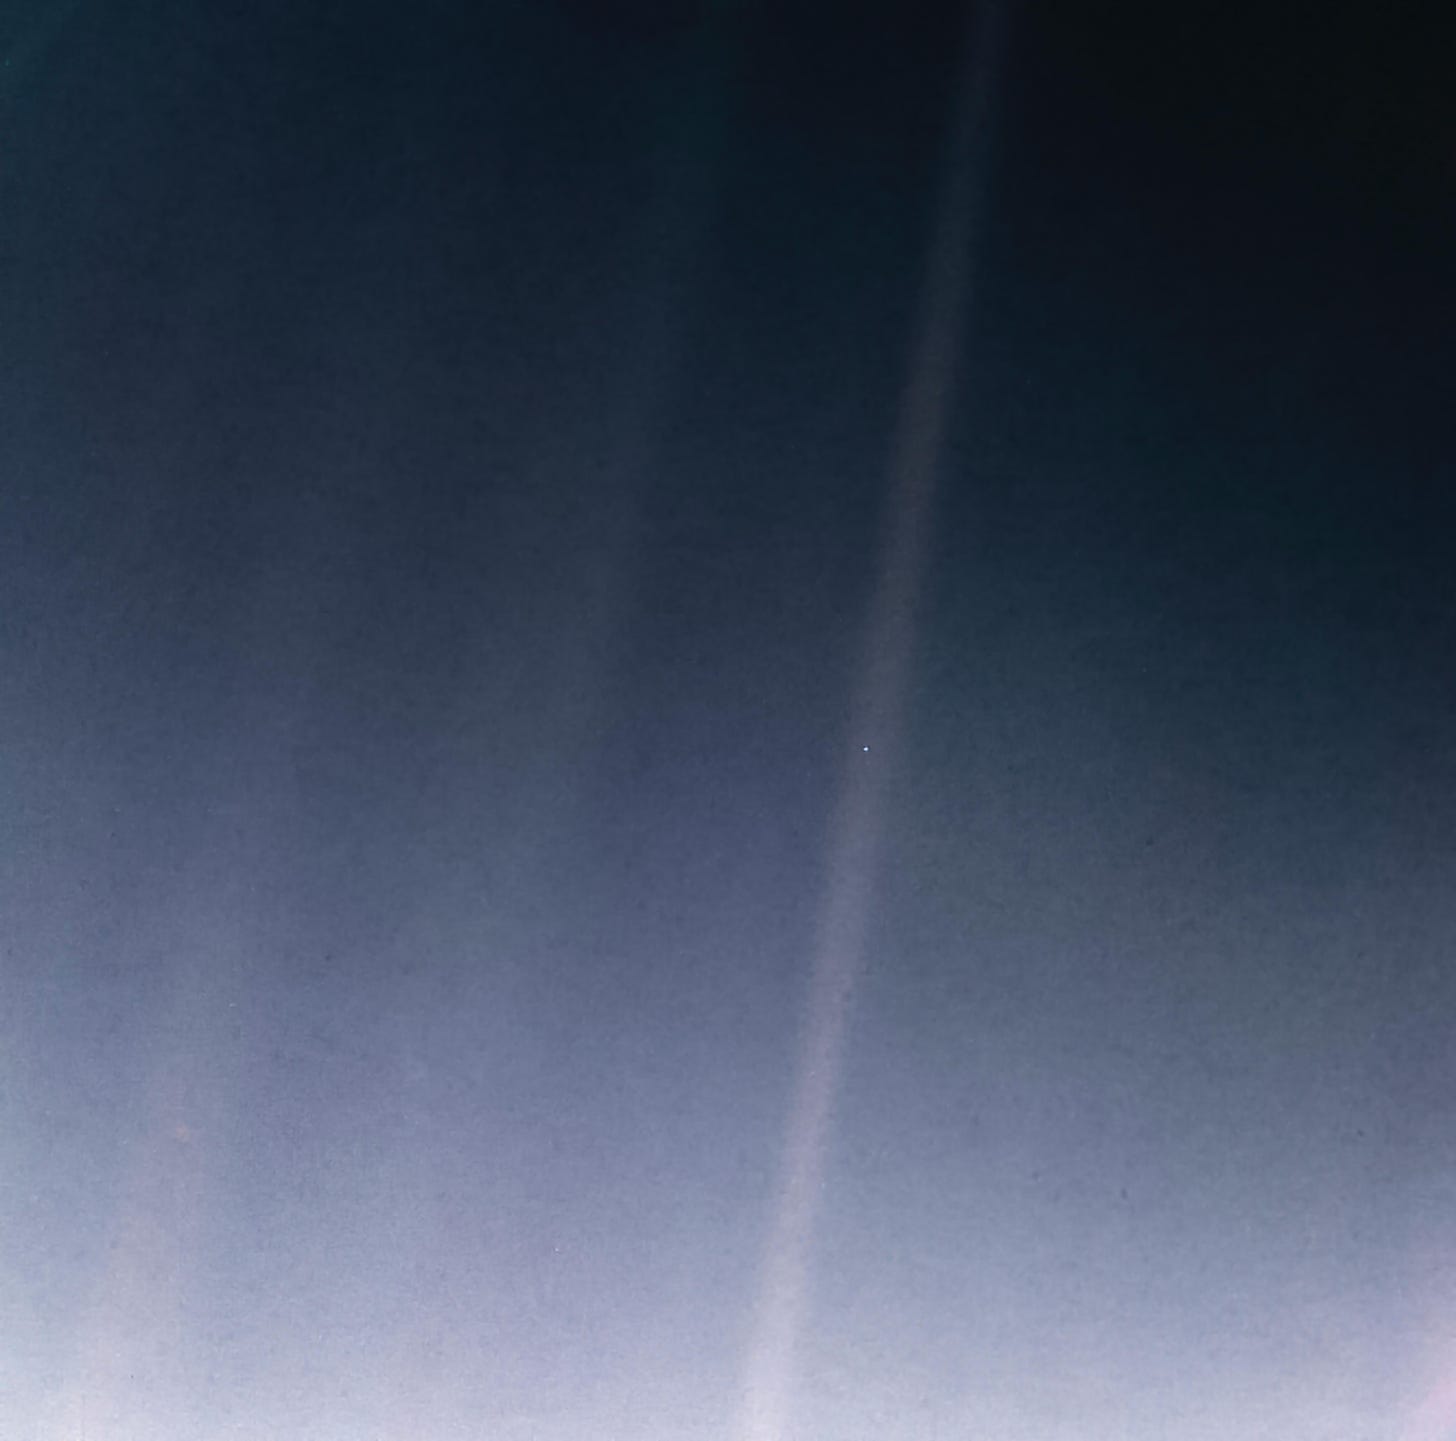 PIA23645: Pale Blue Dot Revisited | Image Credit: NASA/JPL-Caltech